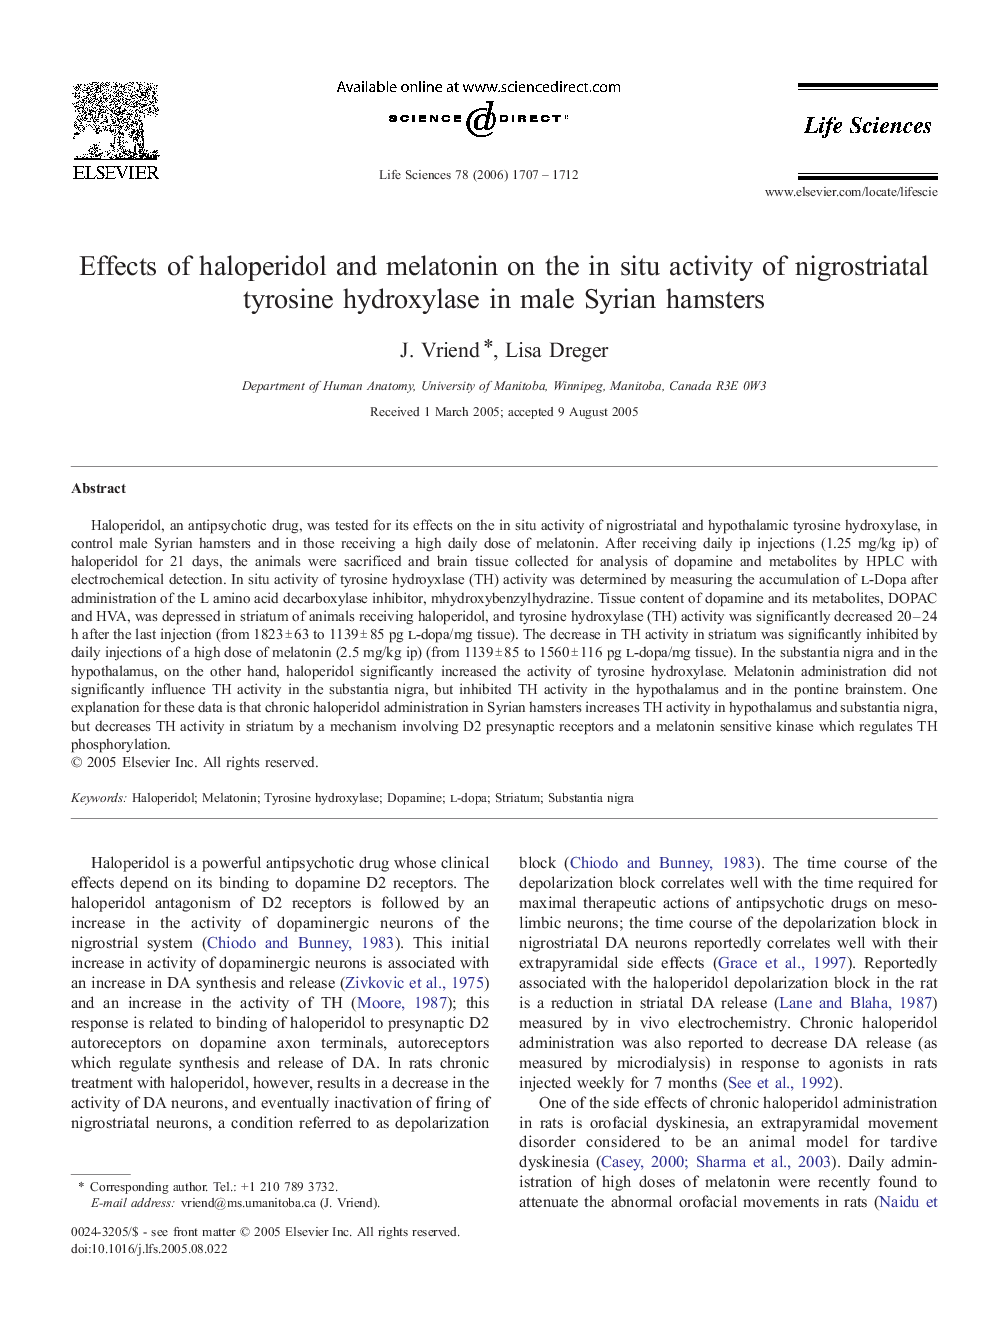 Effects of haloperidol and melatonin on the in situ activity of nigrostriatal tyrosine hydroxylase in male Syrian hamsters